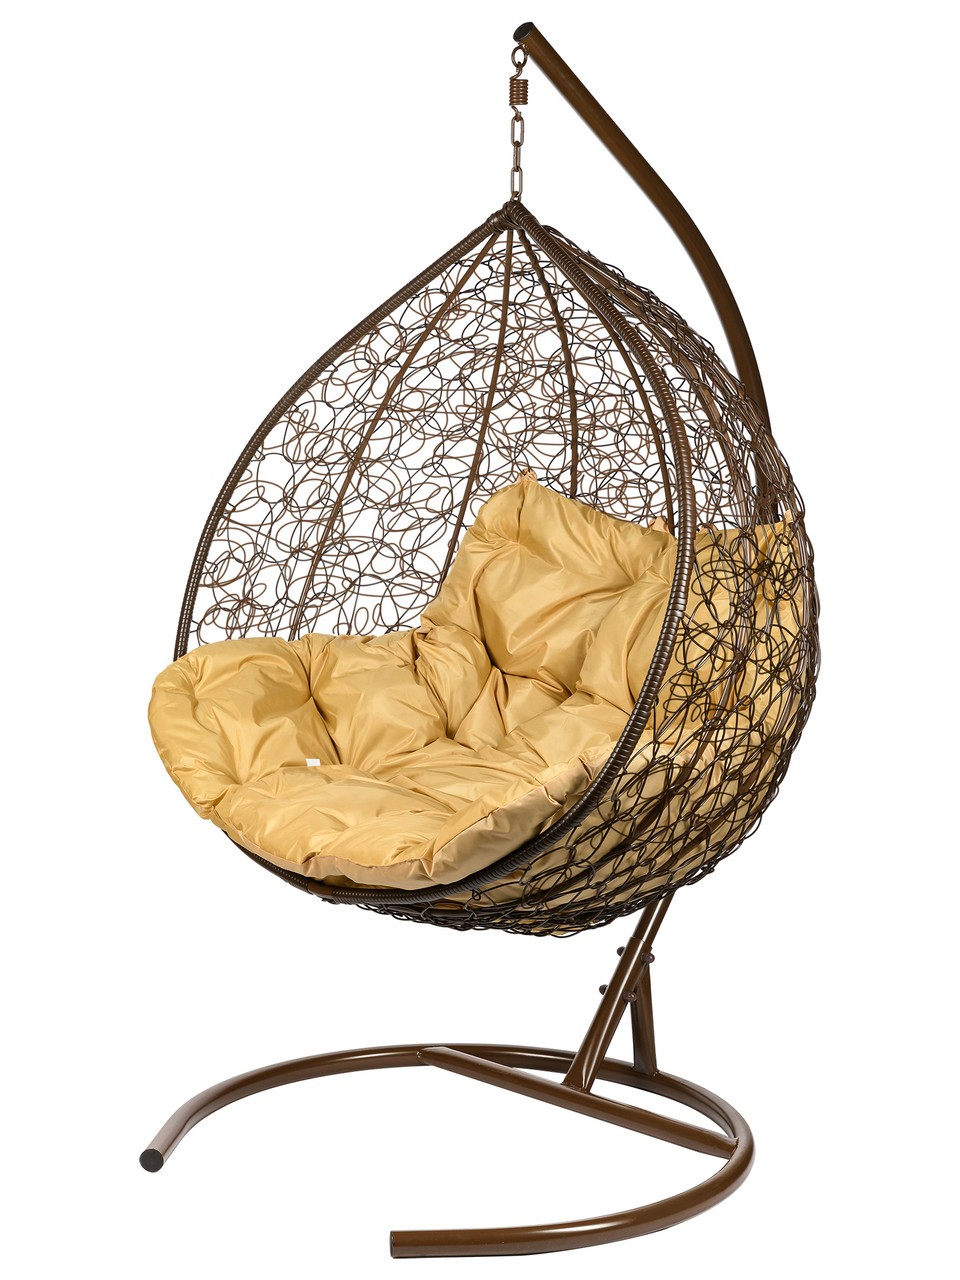 Двойное подвесное кресло "Gemini" promo brown бежевая подушка